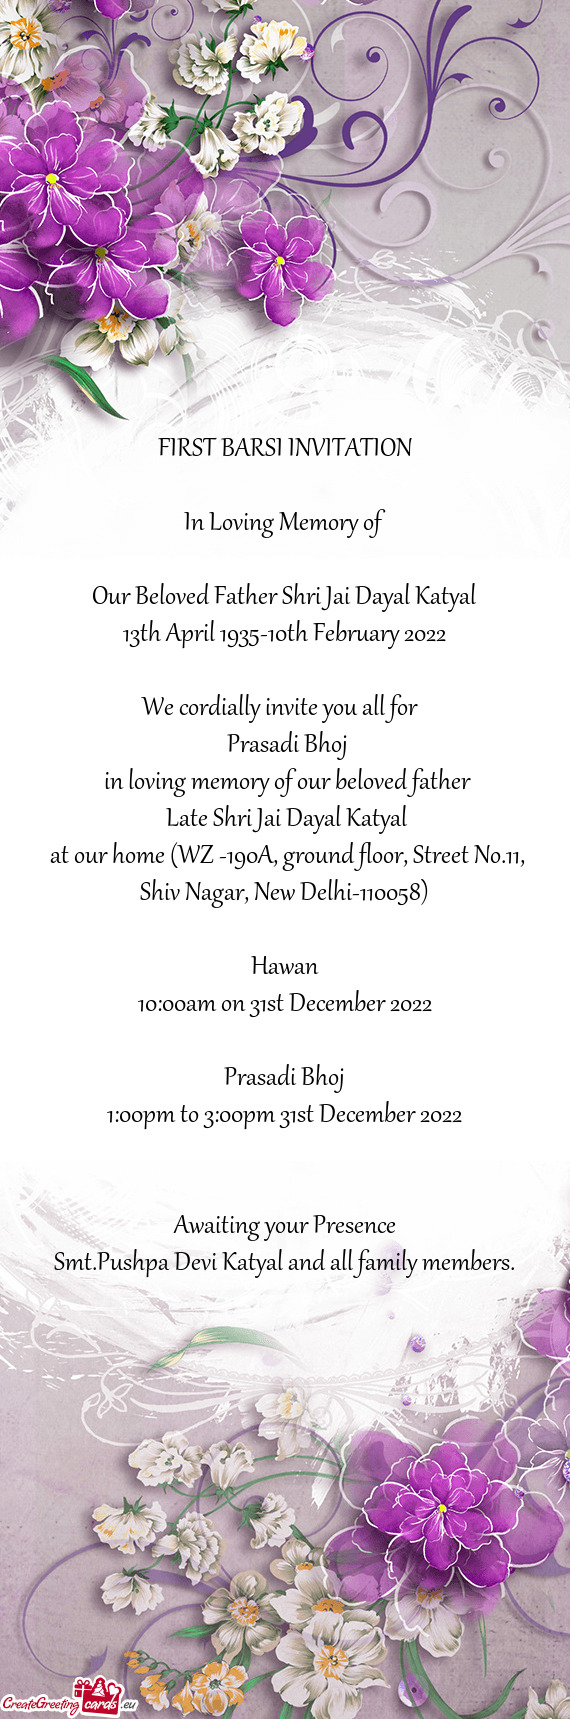 Our Beloved Father Shri Jai Dayal Katyal